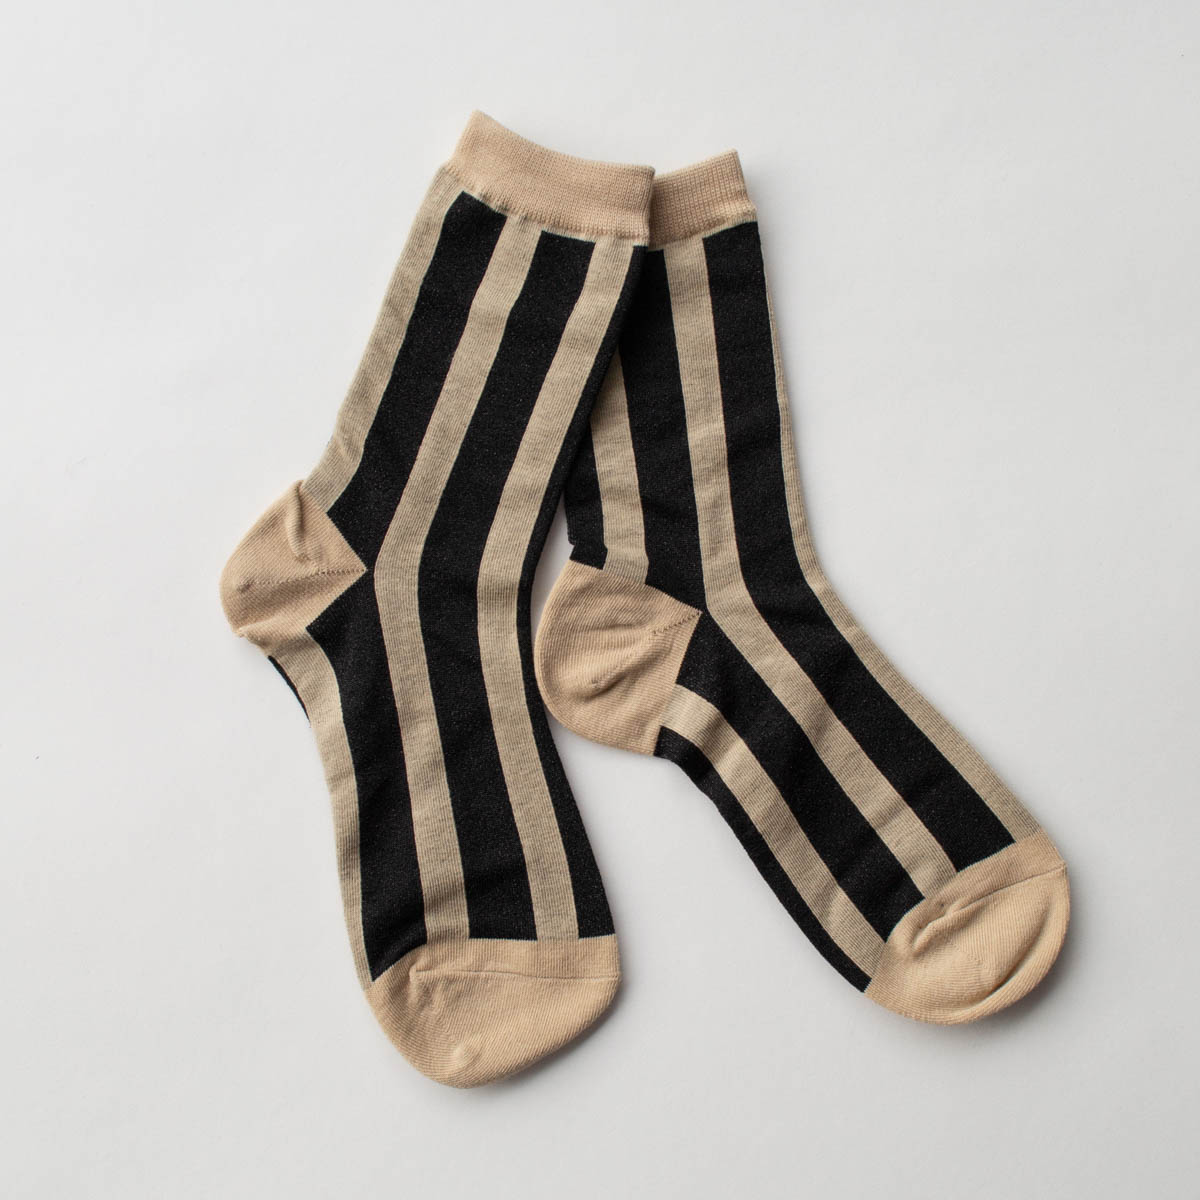 cotton knit crew socks in beige with a sleek black lurex vertical stripe pattern